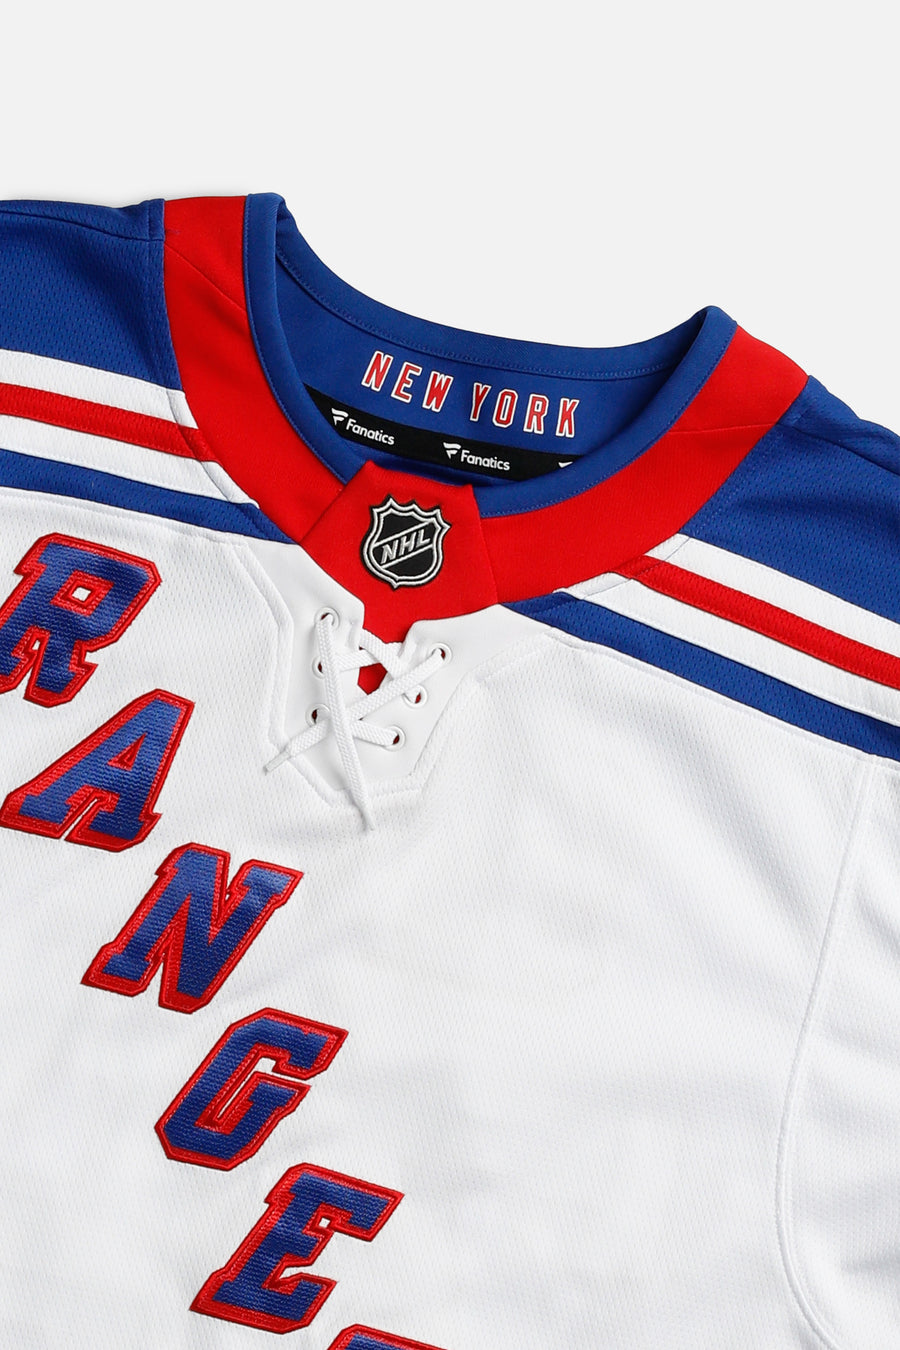 New York Rangers NHL Jersey - S